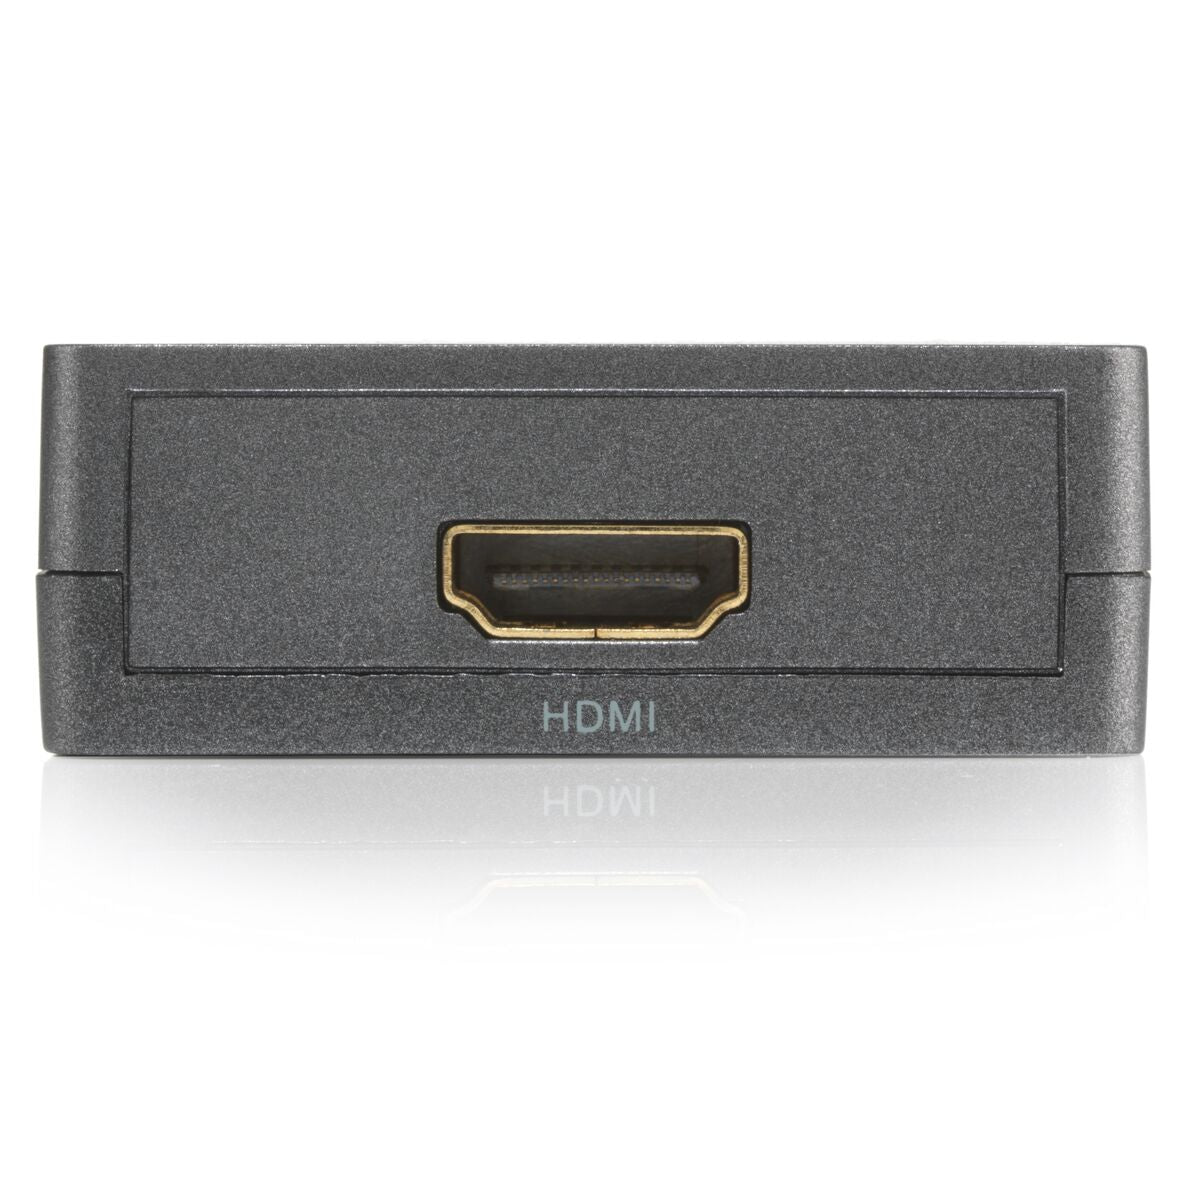 Connect HV15 - HDMI auf VGA-Adapter